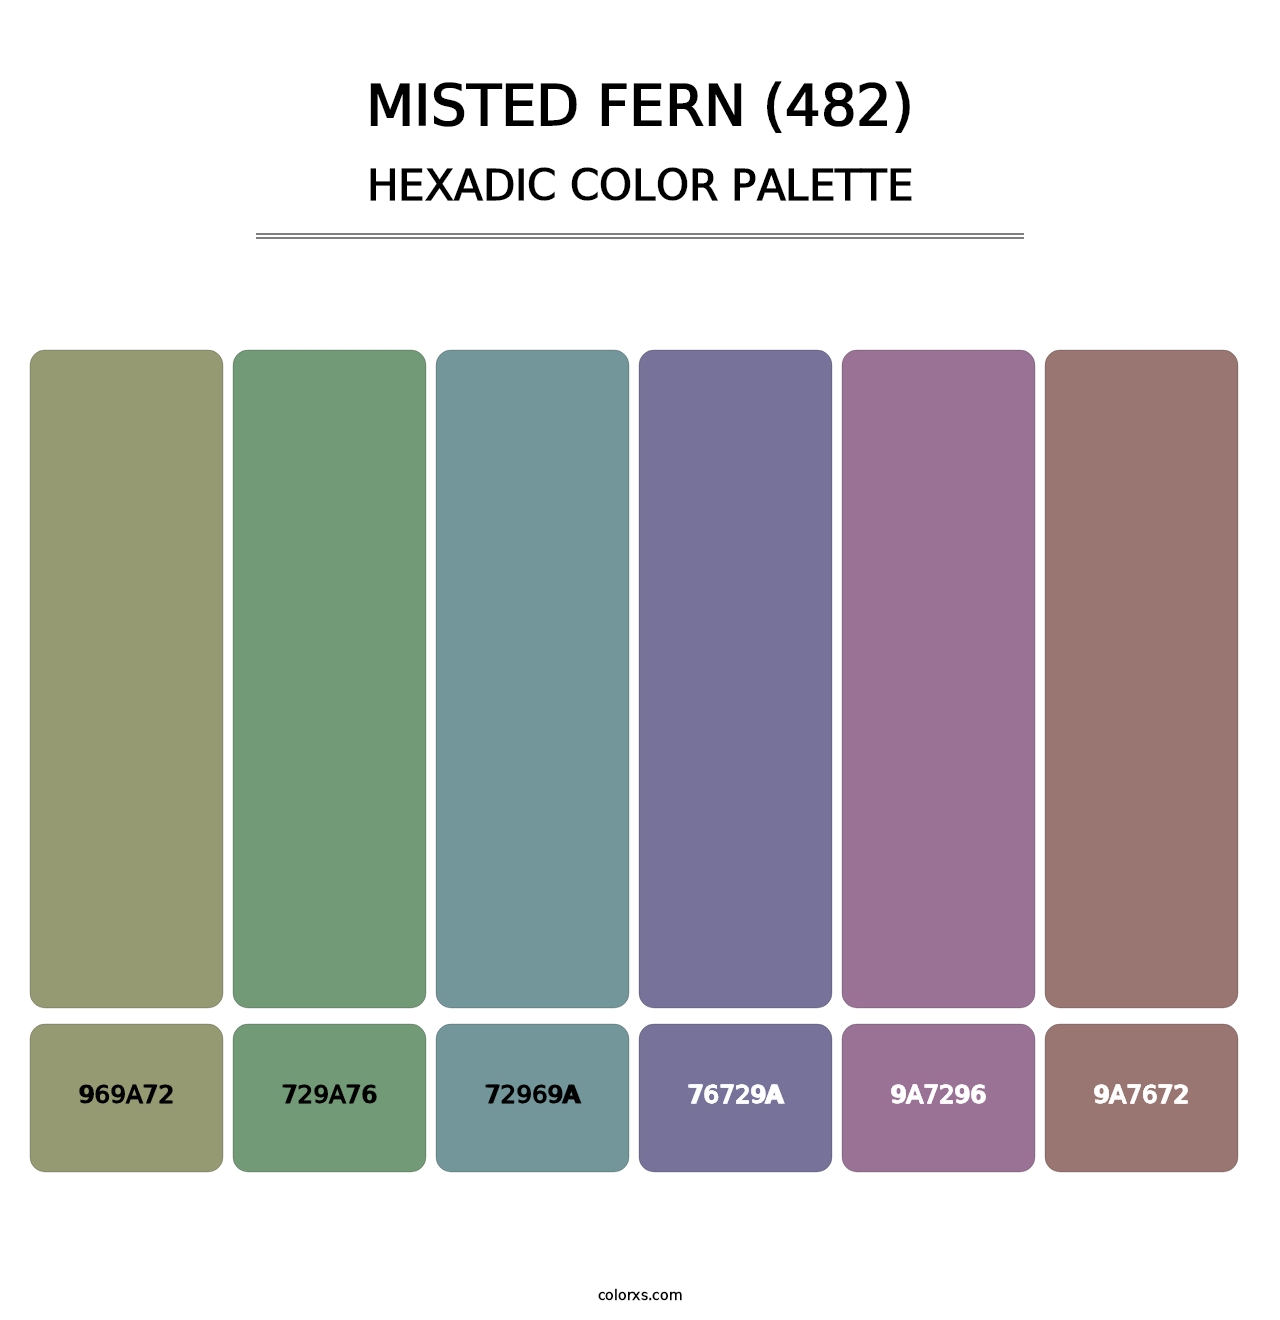 Misted Fern (482) - Hexadic Color Palette